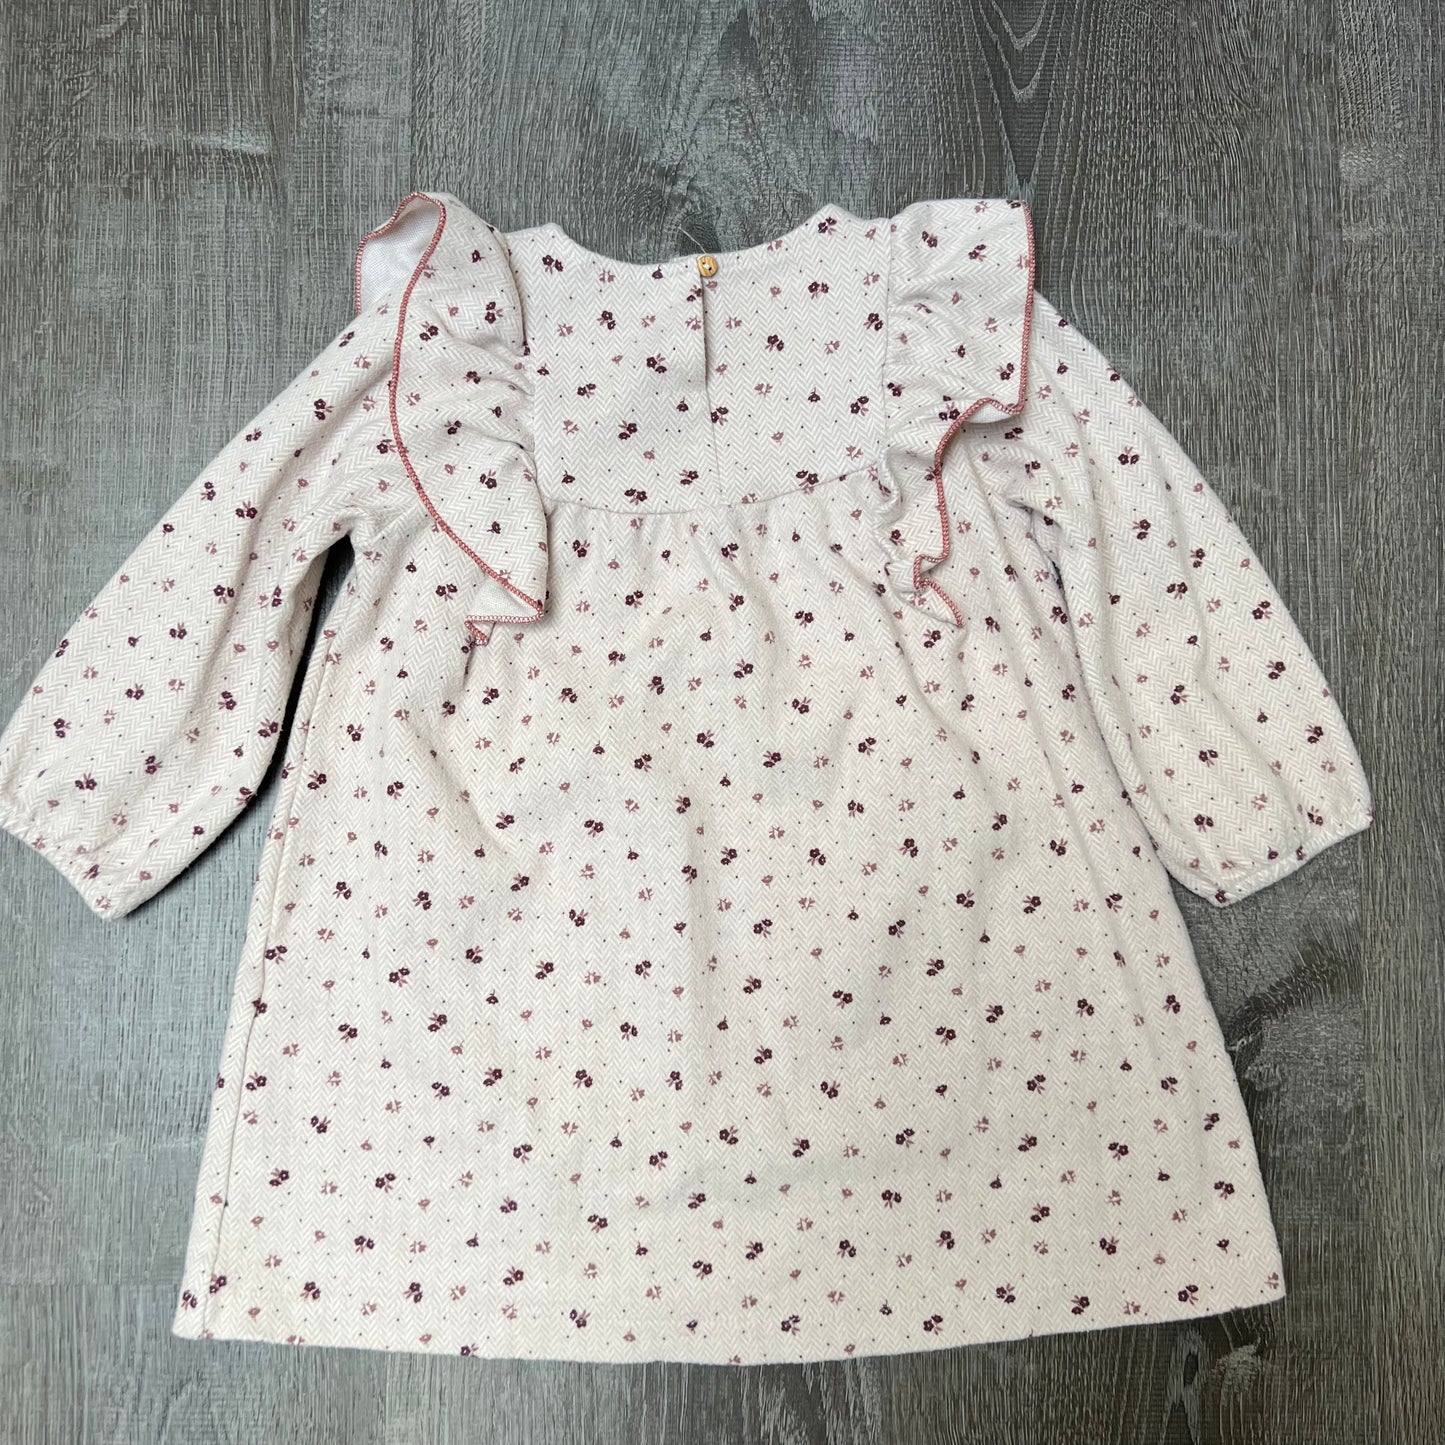 Cream and floral toddler Zara dress - back